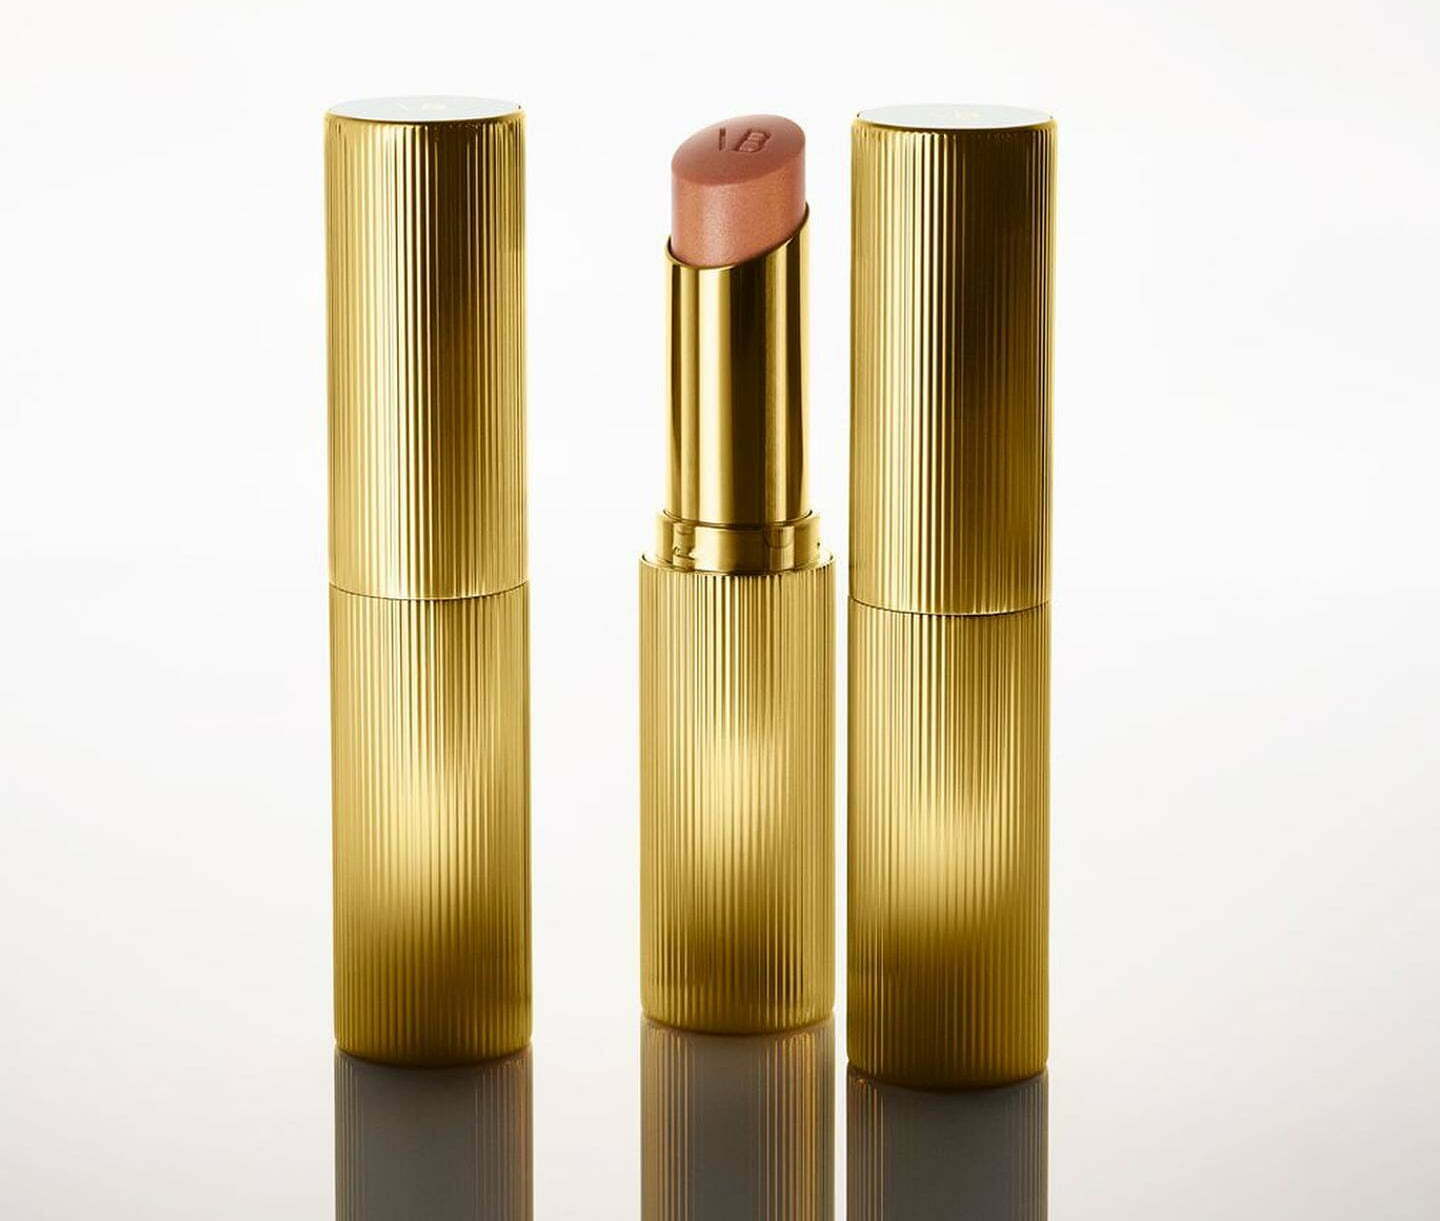 Victoria Beckham Beauty Reflect Highlighter Stick in Amber